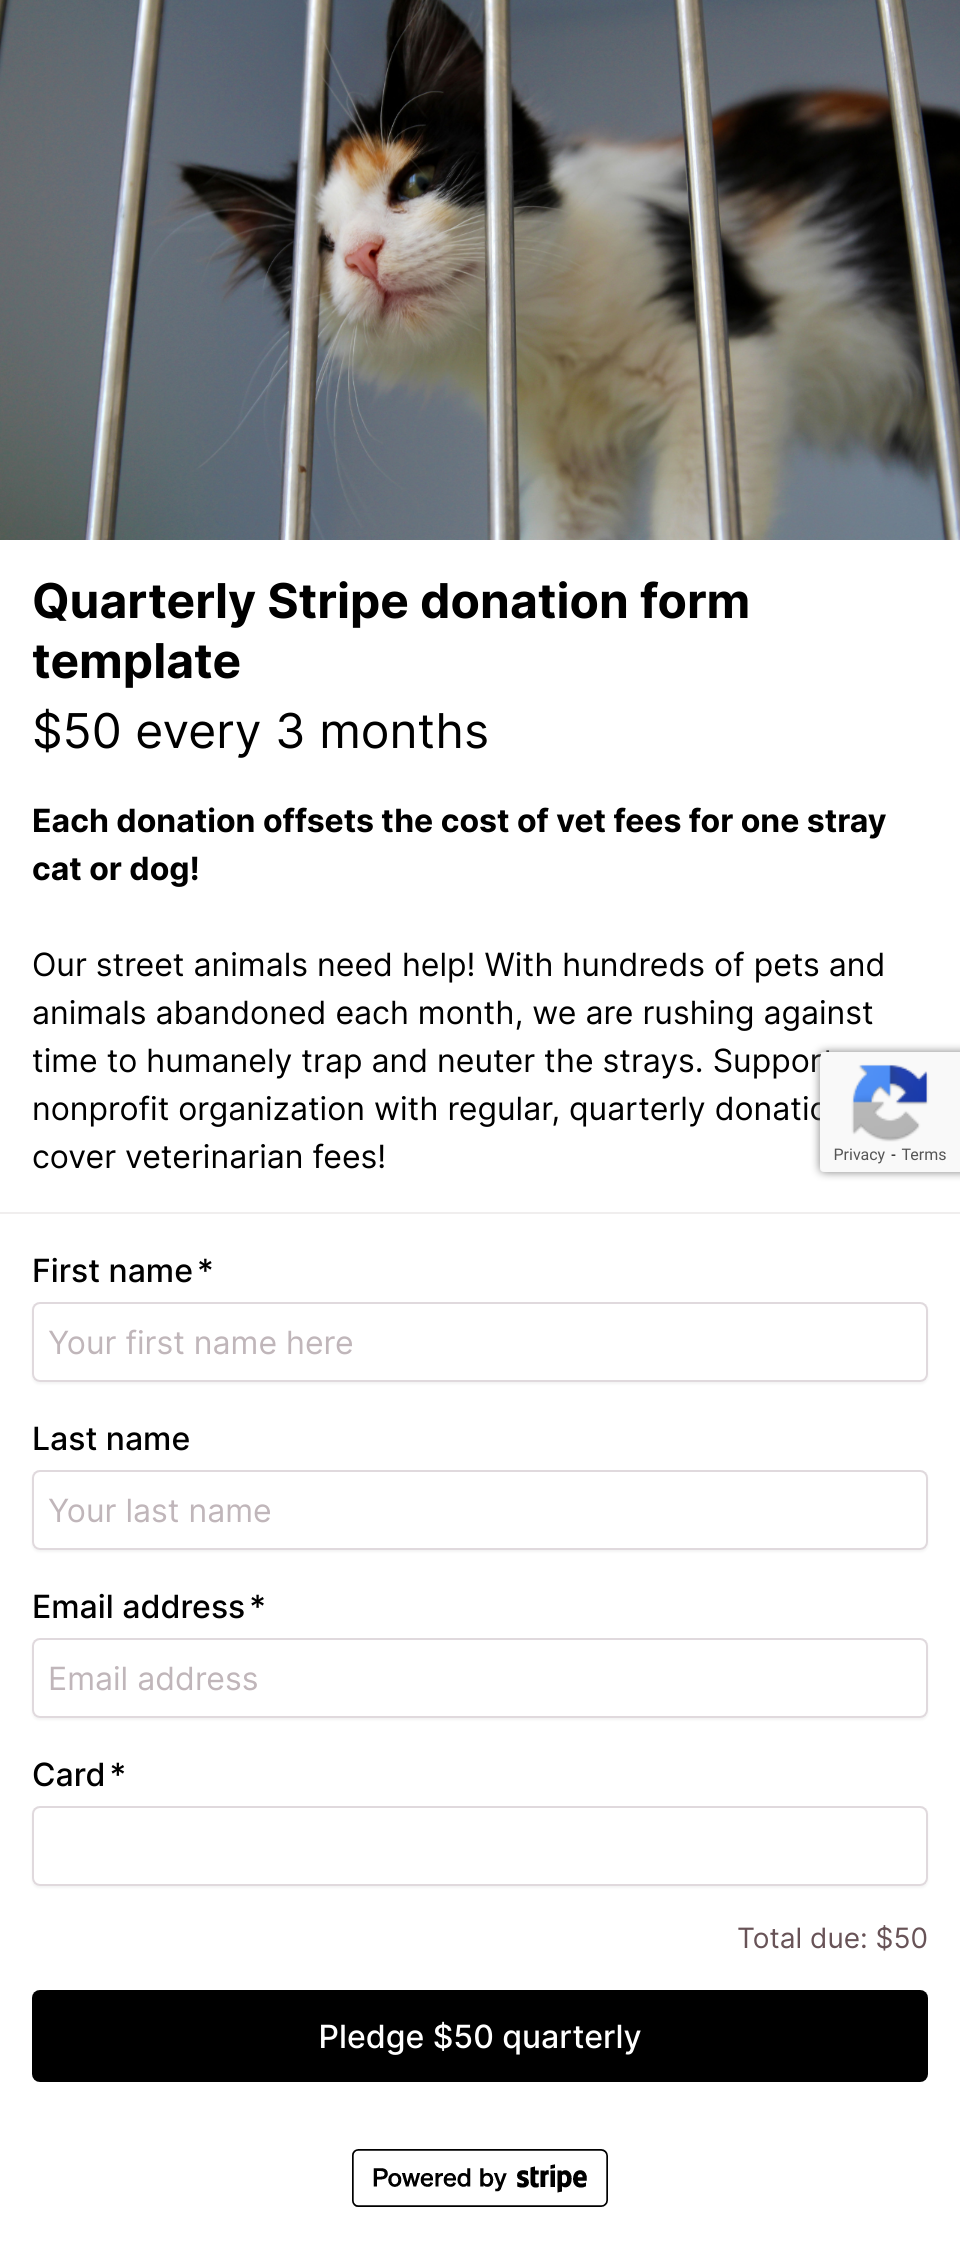 Quarterly Stripe donation form template